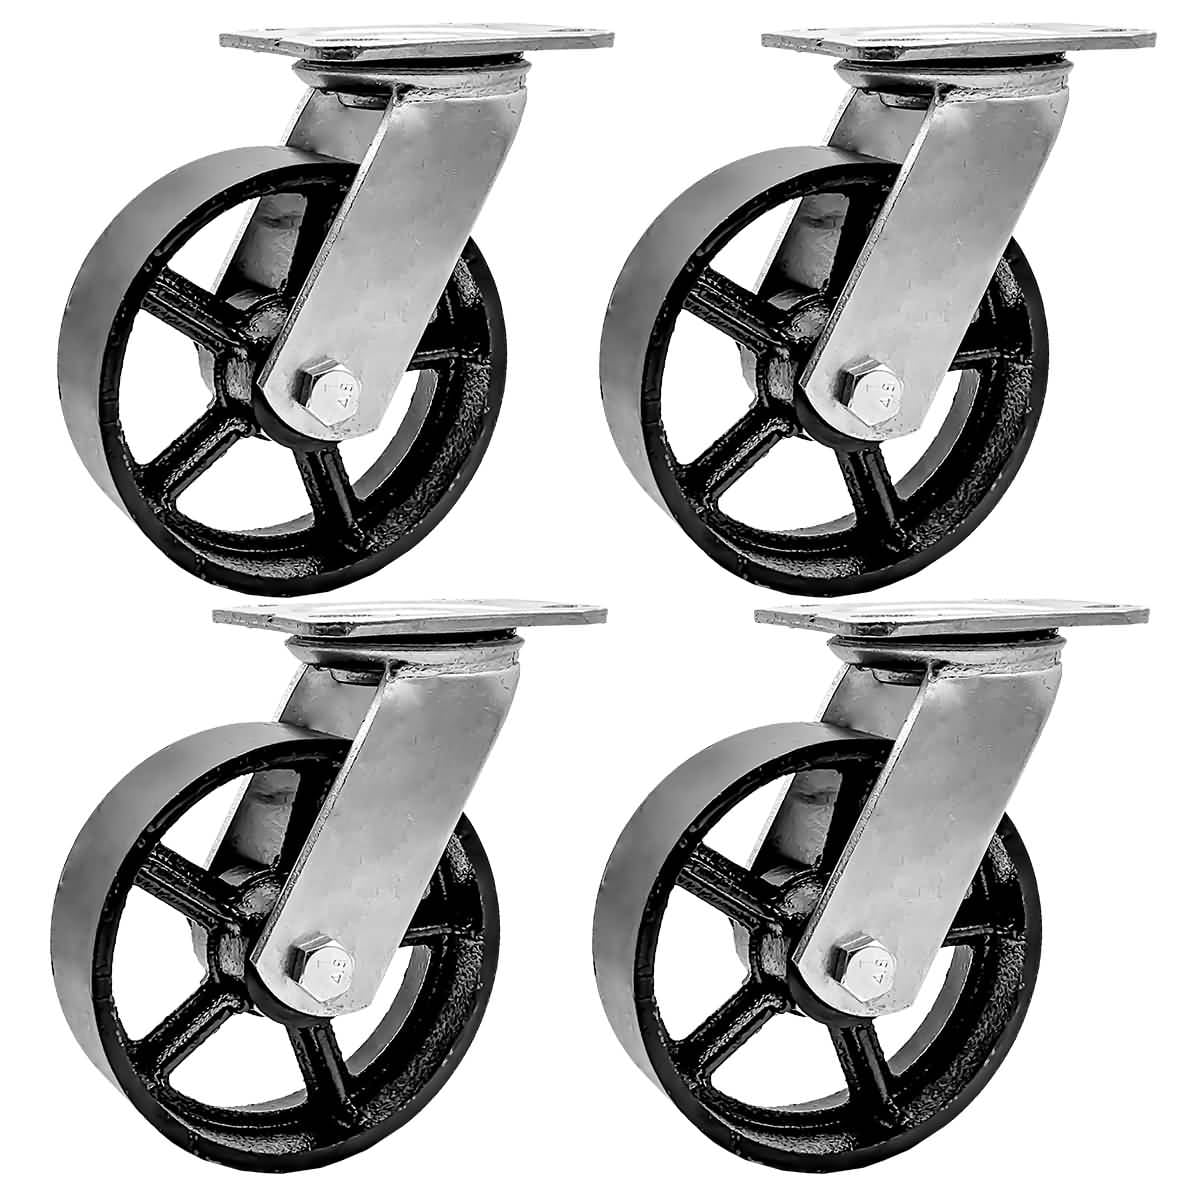 Details about   4 Each Vintage Industrial Casters 1 1/2” Black Okastic Wheel 